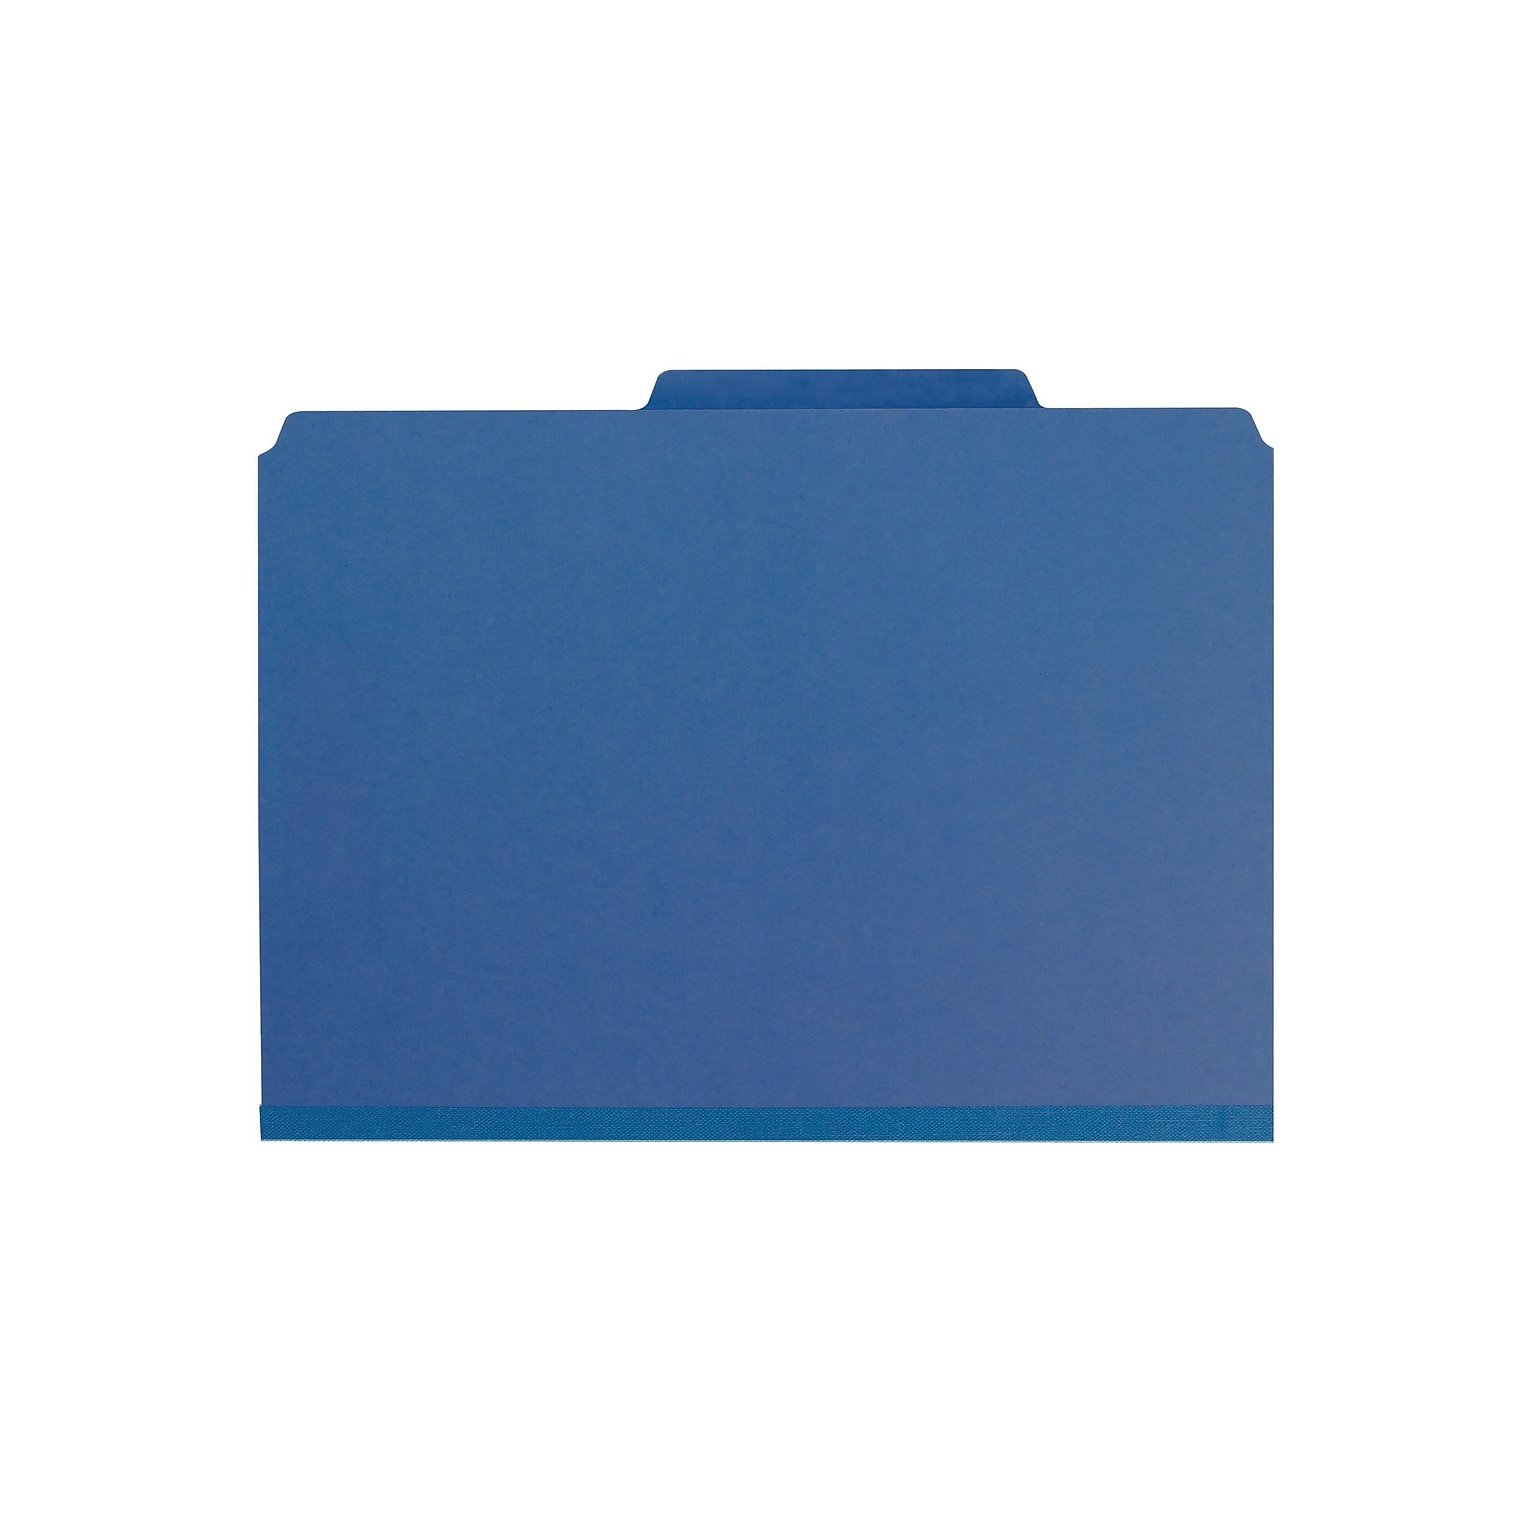 Smead Pressboard File Folder, 1/3-Cut Tab, 1 Expansion, Letter Size, Dark Blue, 25/Box (21541)